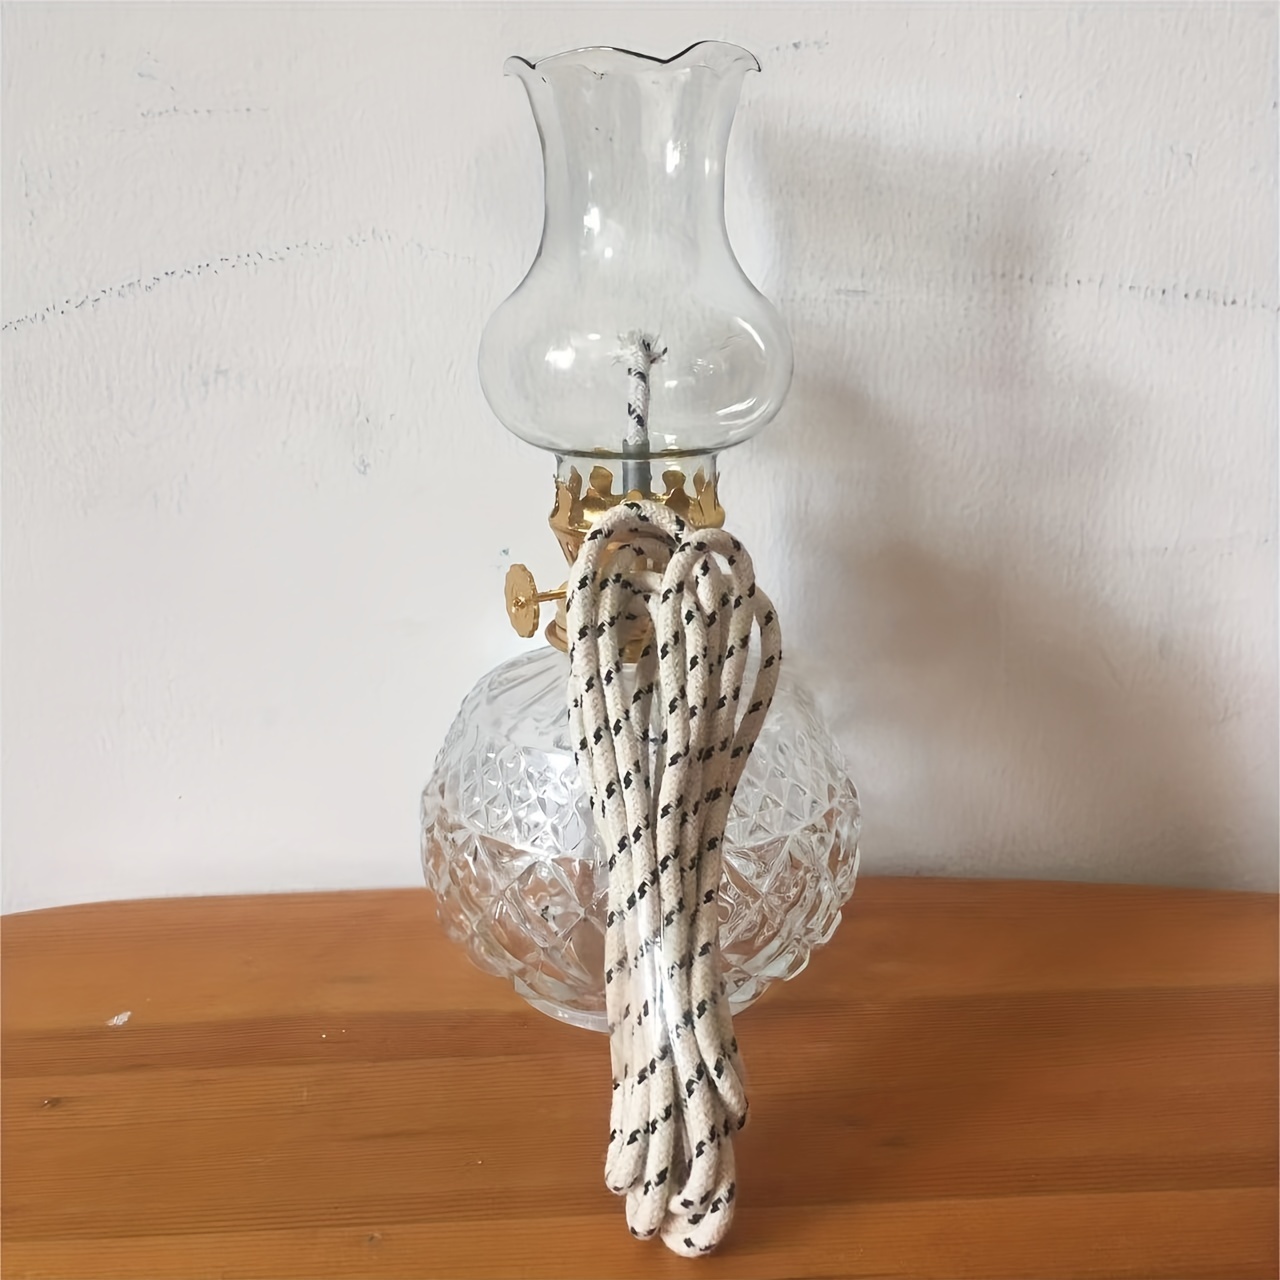 Kerosene Lamp Wick Pure Knitted Oil Lamp - Temu